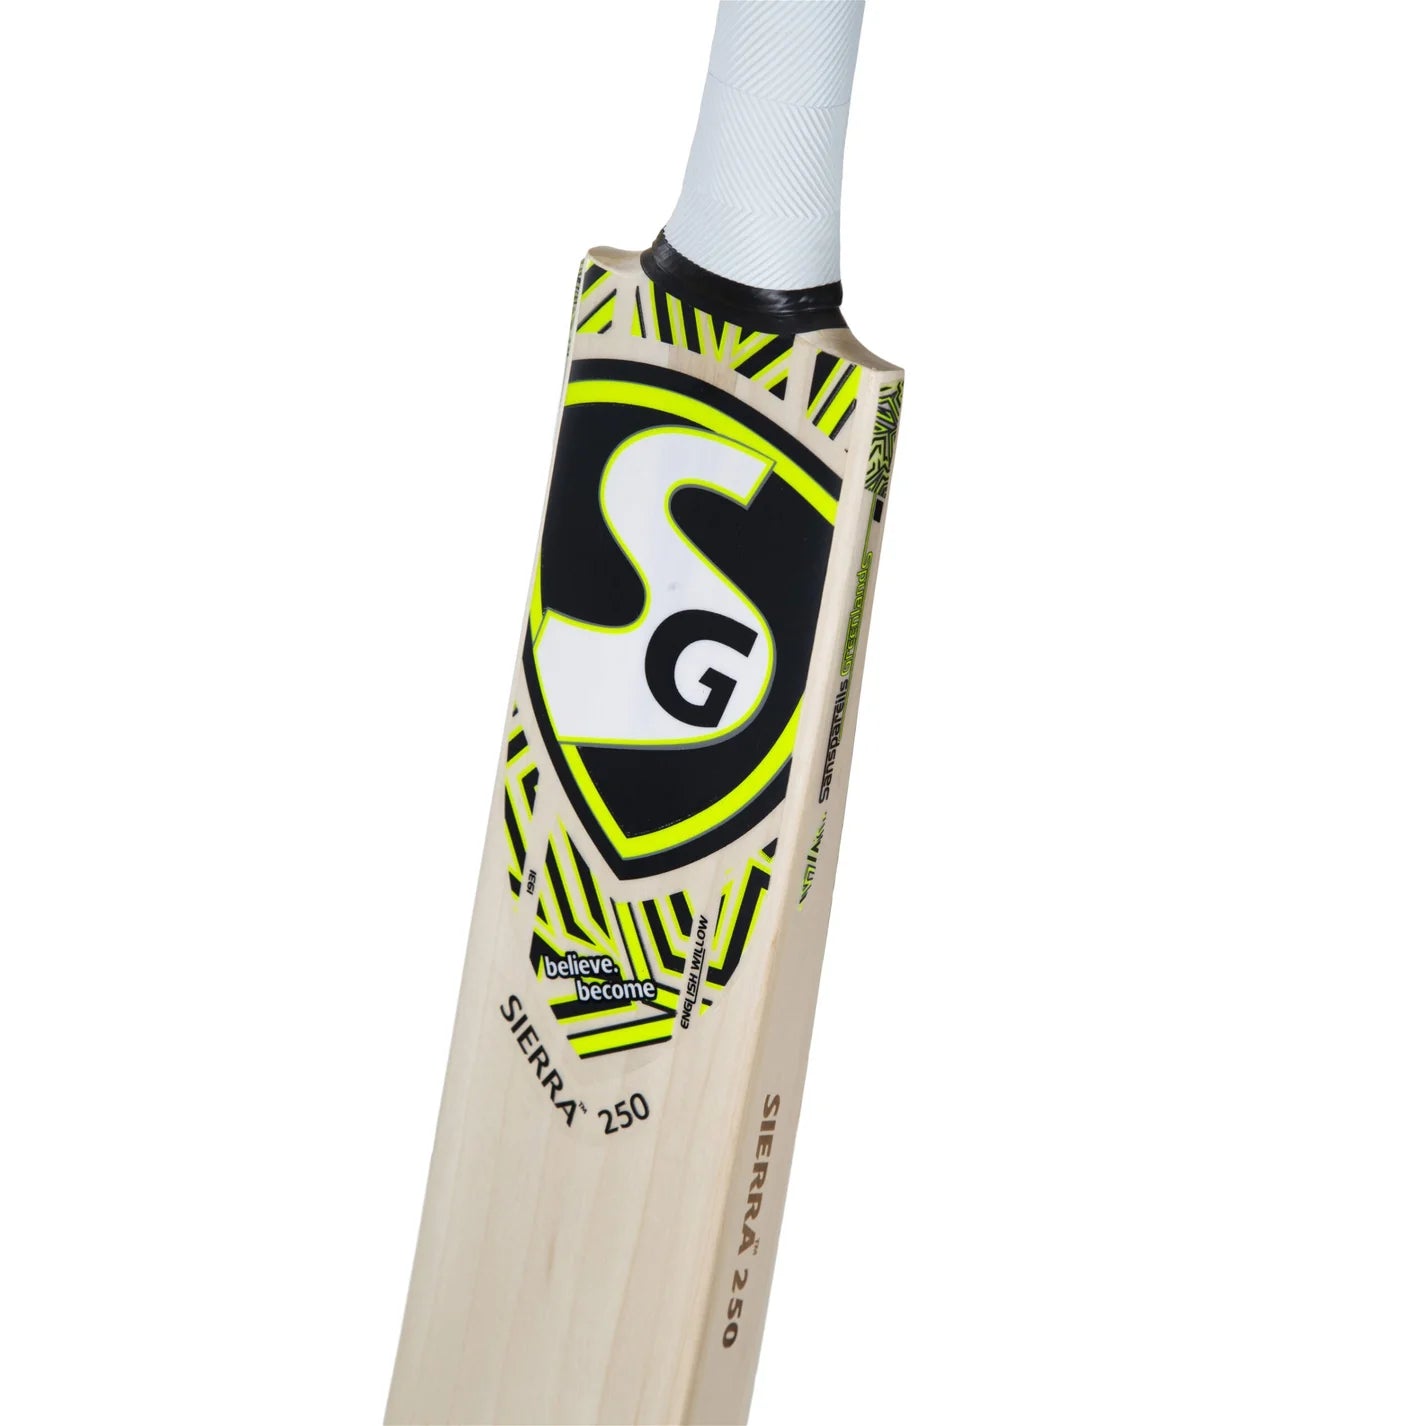 SG Sierra 250 Grade 4 world’s finest English willow traditionally shaped Cricket Bat